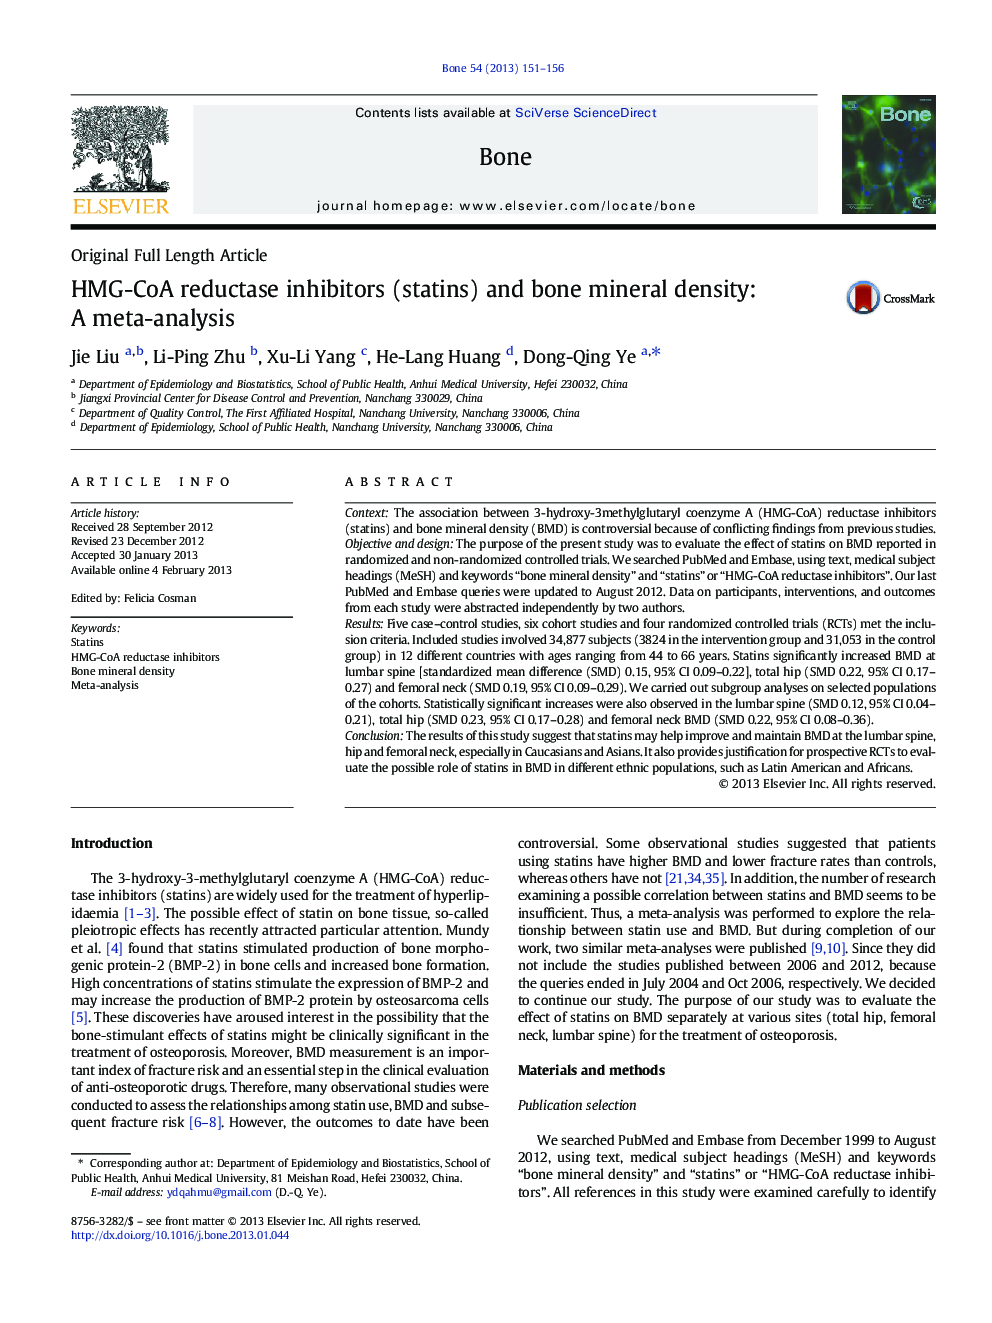 HMG-CoA reductase inhibitors (statins) and bone mineral density: A meta-analysis